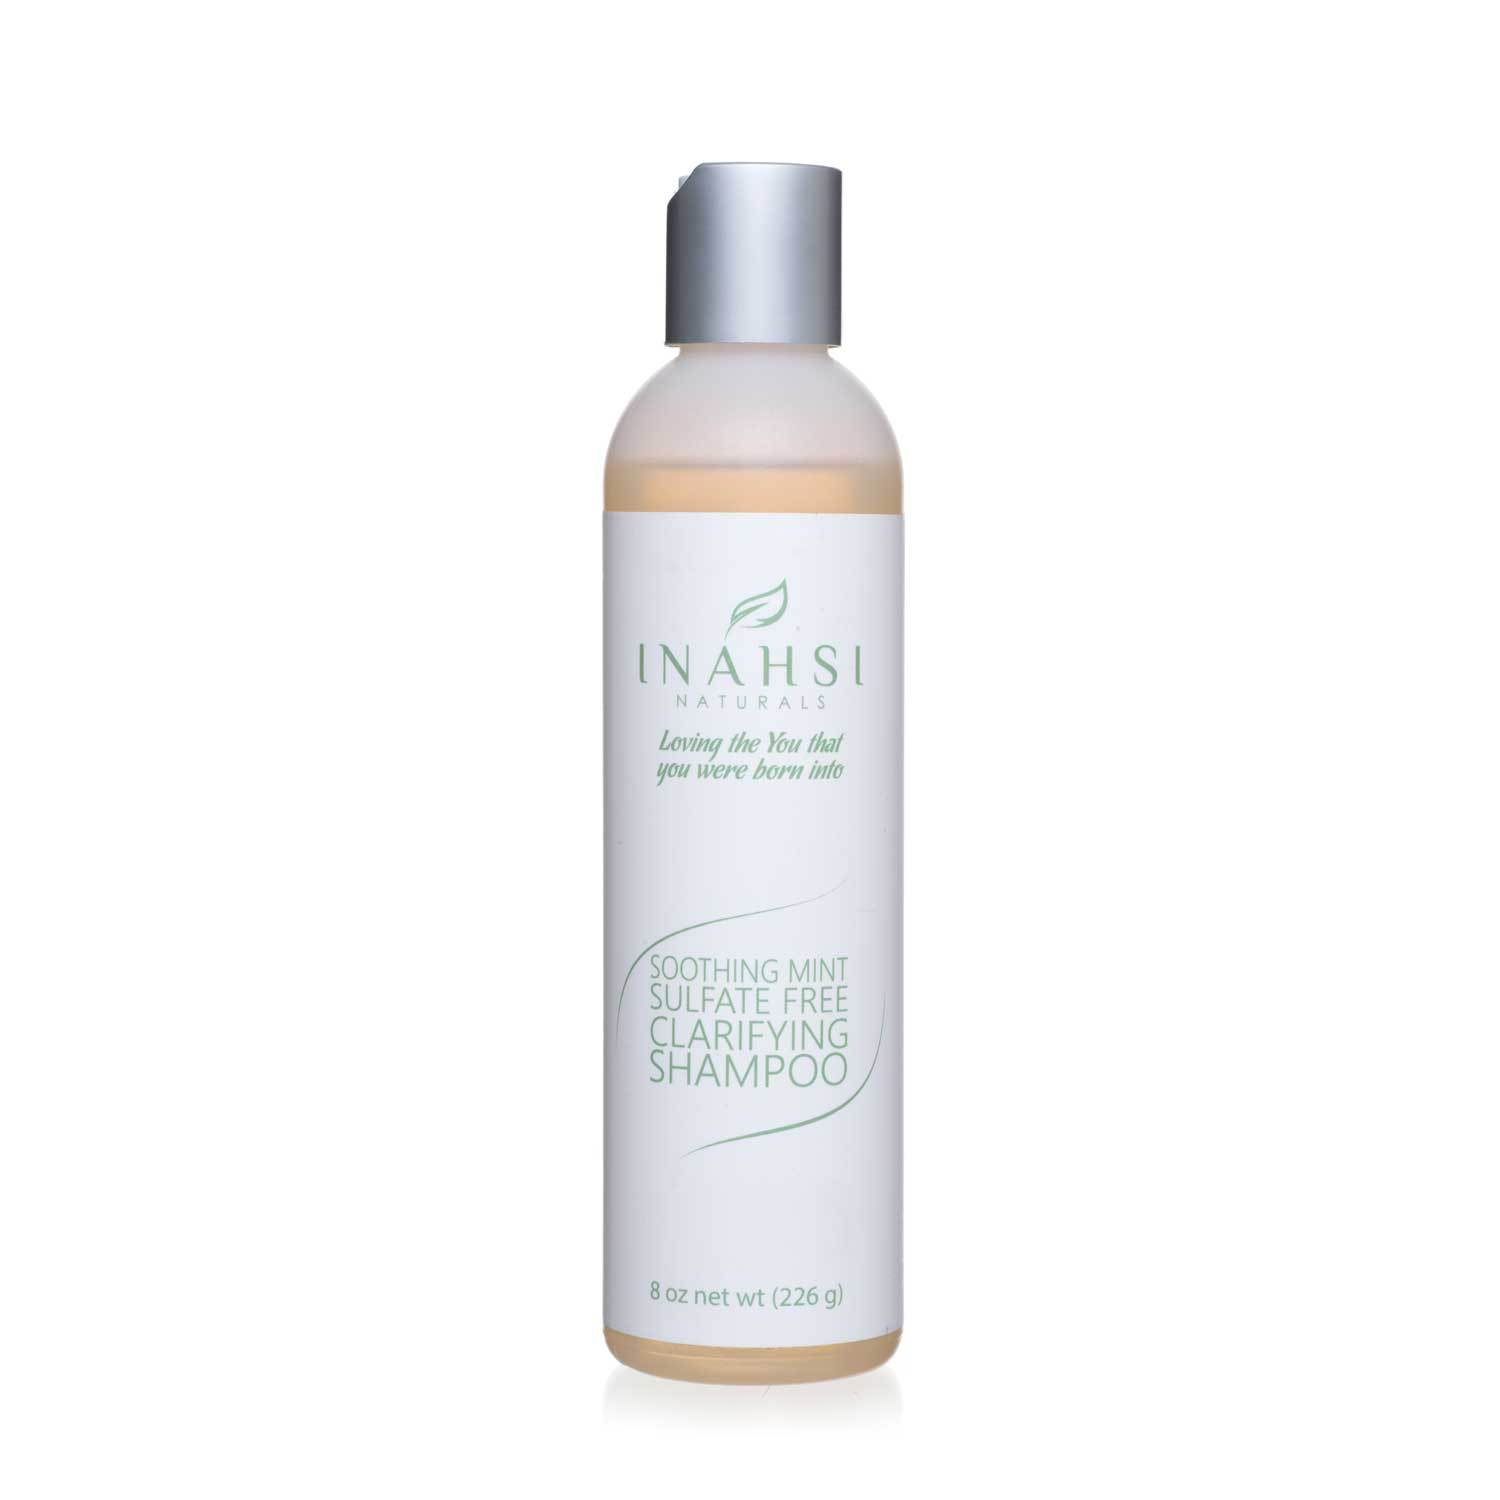 Inahsi Naturals Soothing Mint Clarifying Shampoo